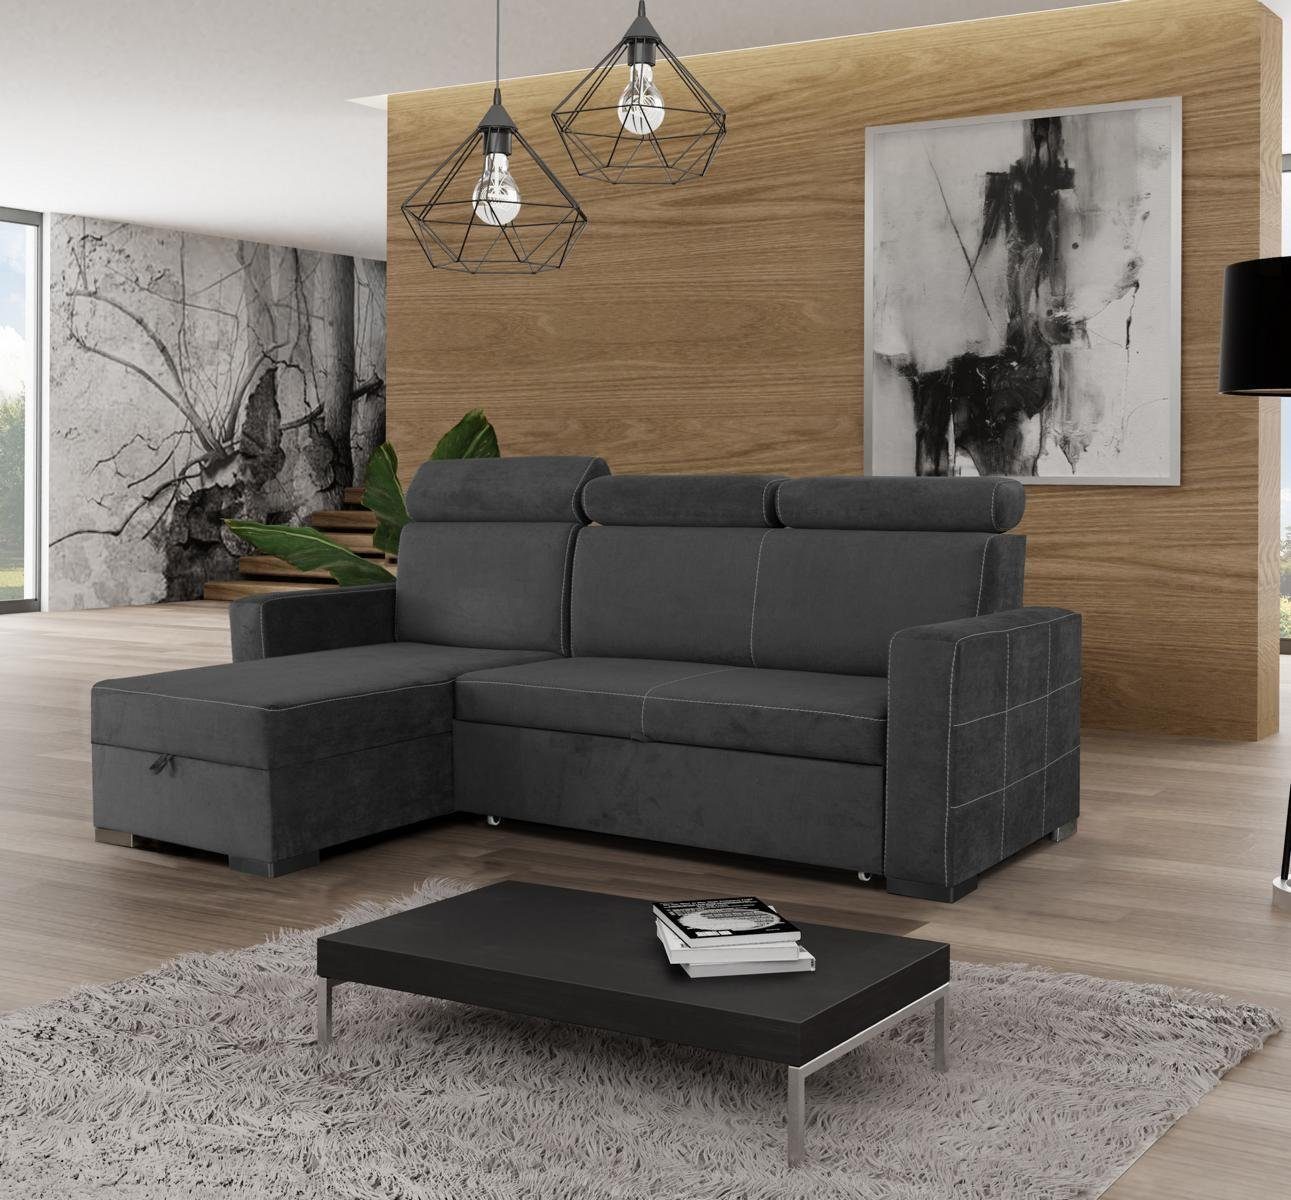 JVmoebel Ecksofa Luxus Blaues Ecksofa Moderne L-Form Couch stilvolles Design Neu, Made in Europe Schwarz